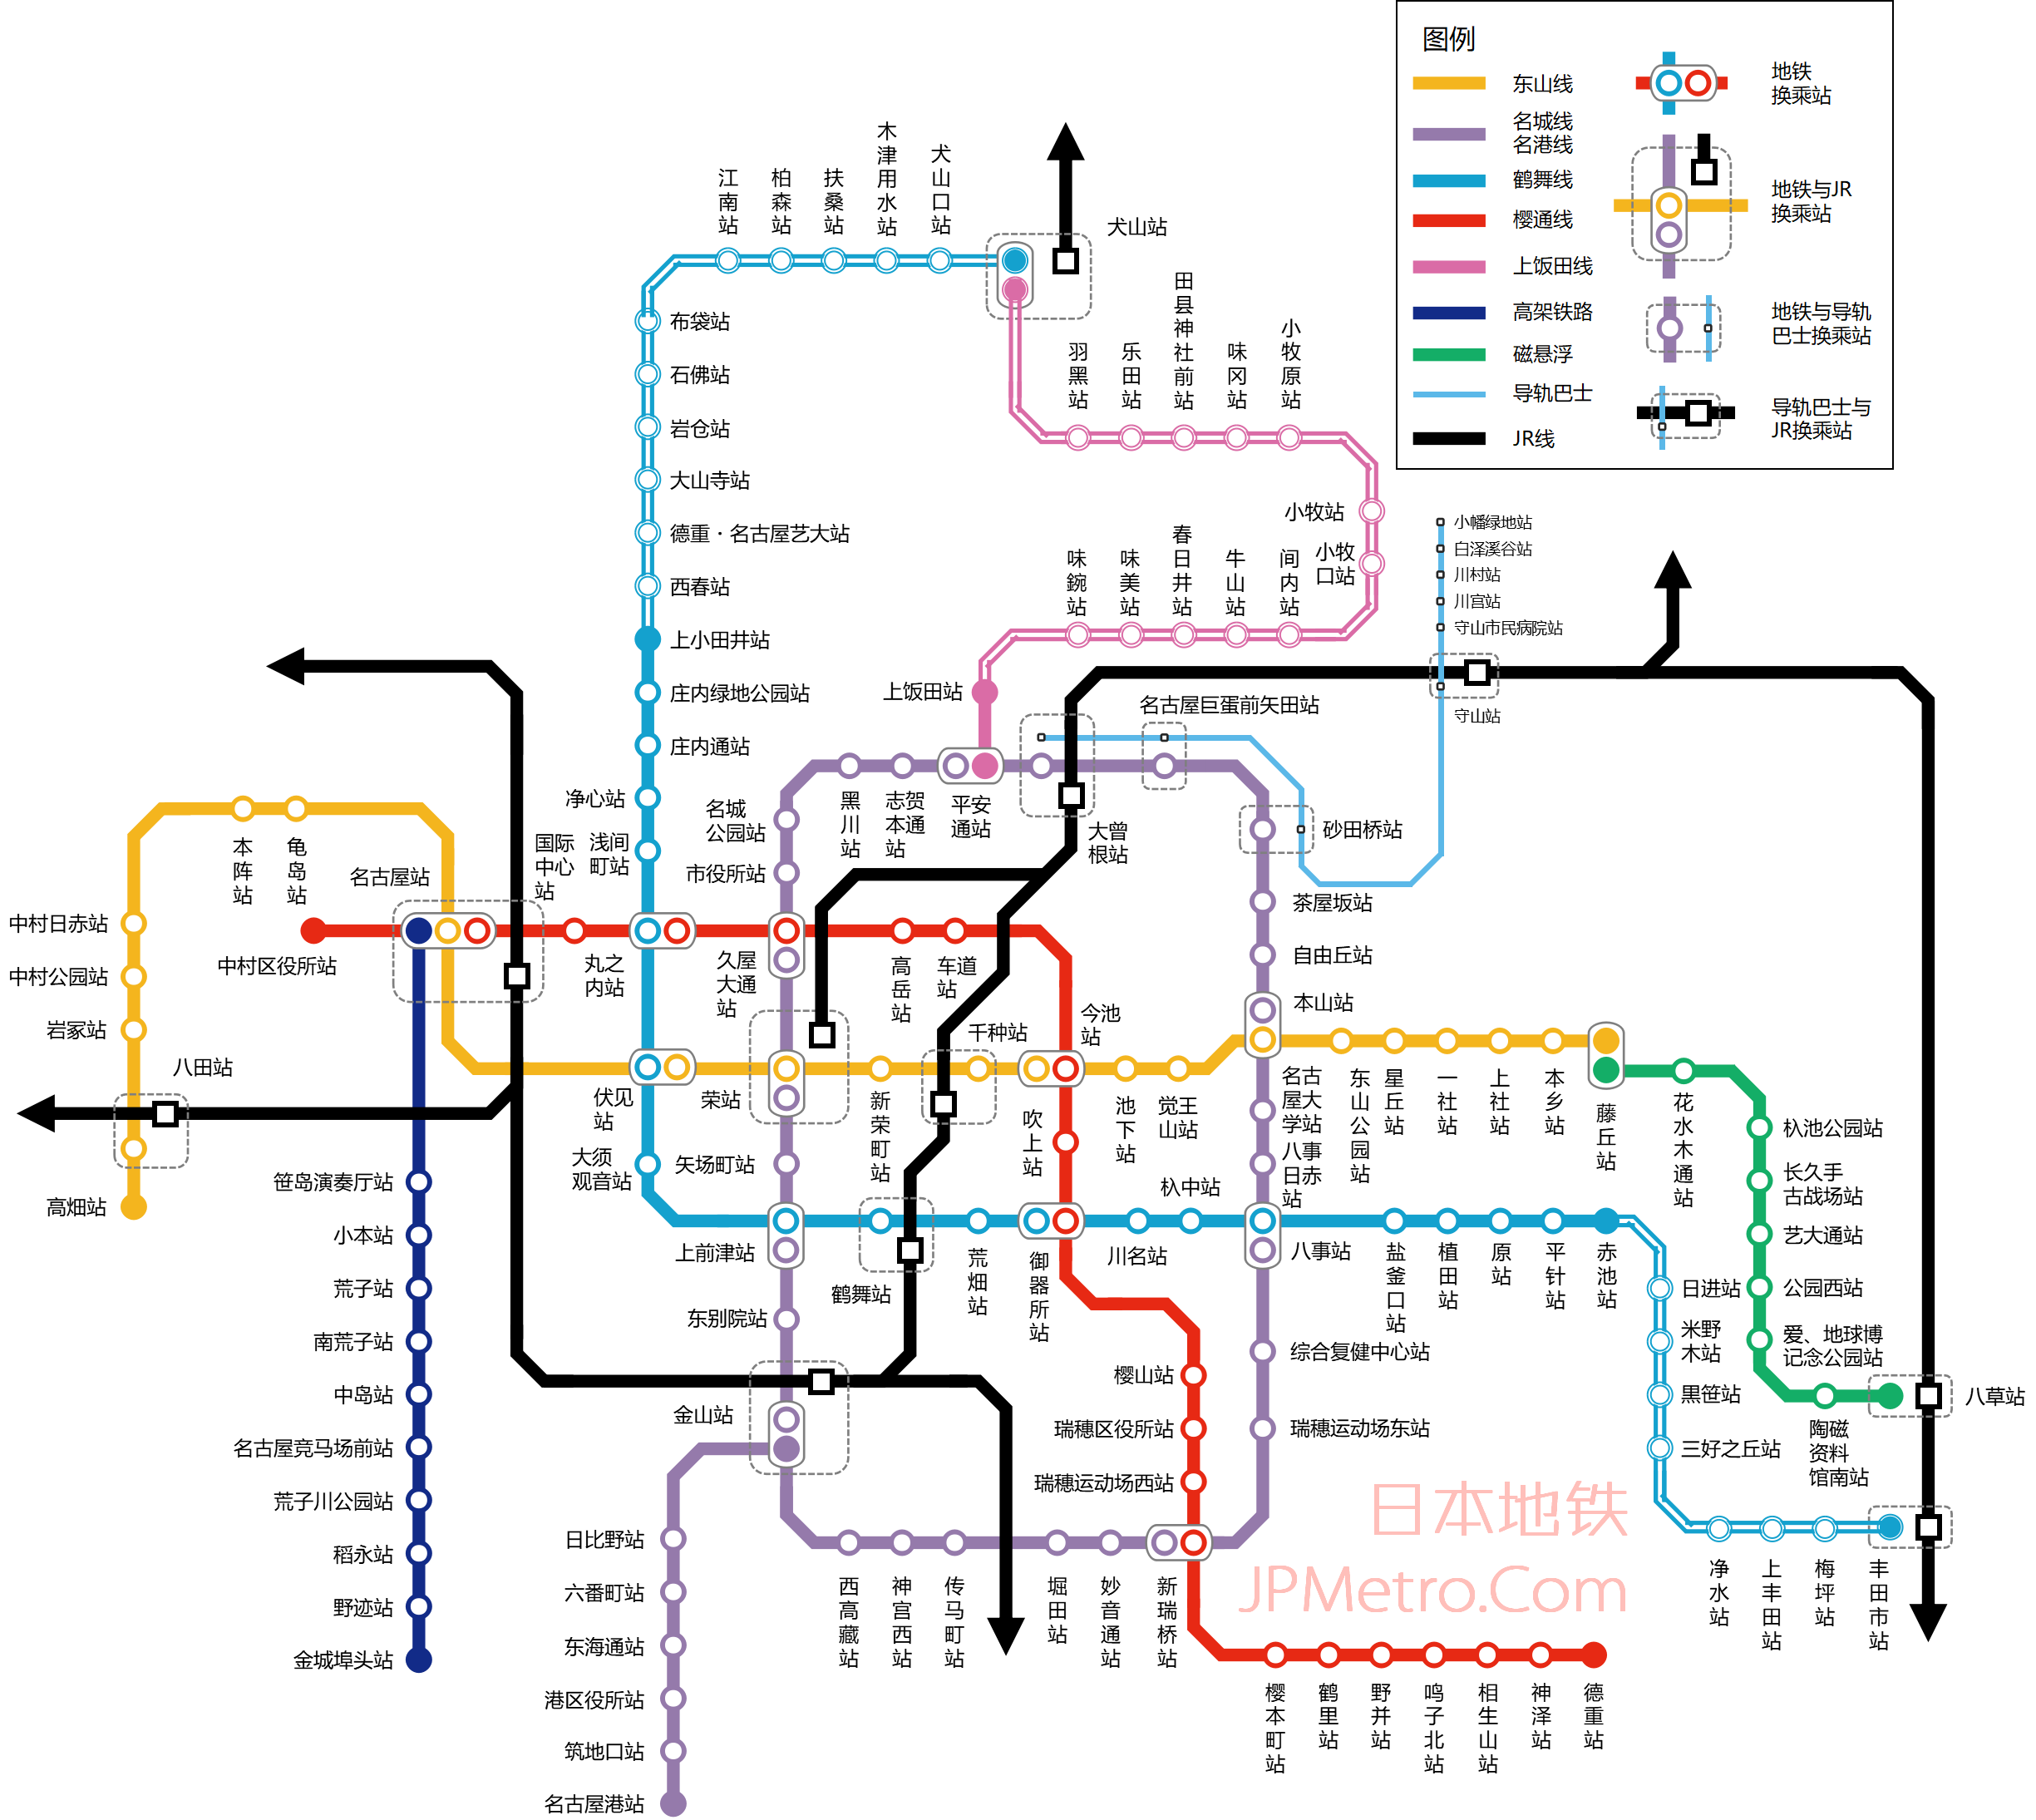 JR东日本首都圈线路图 - 知乎